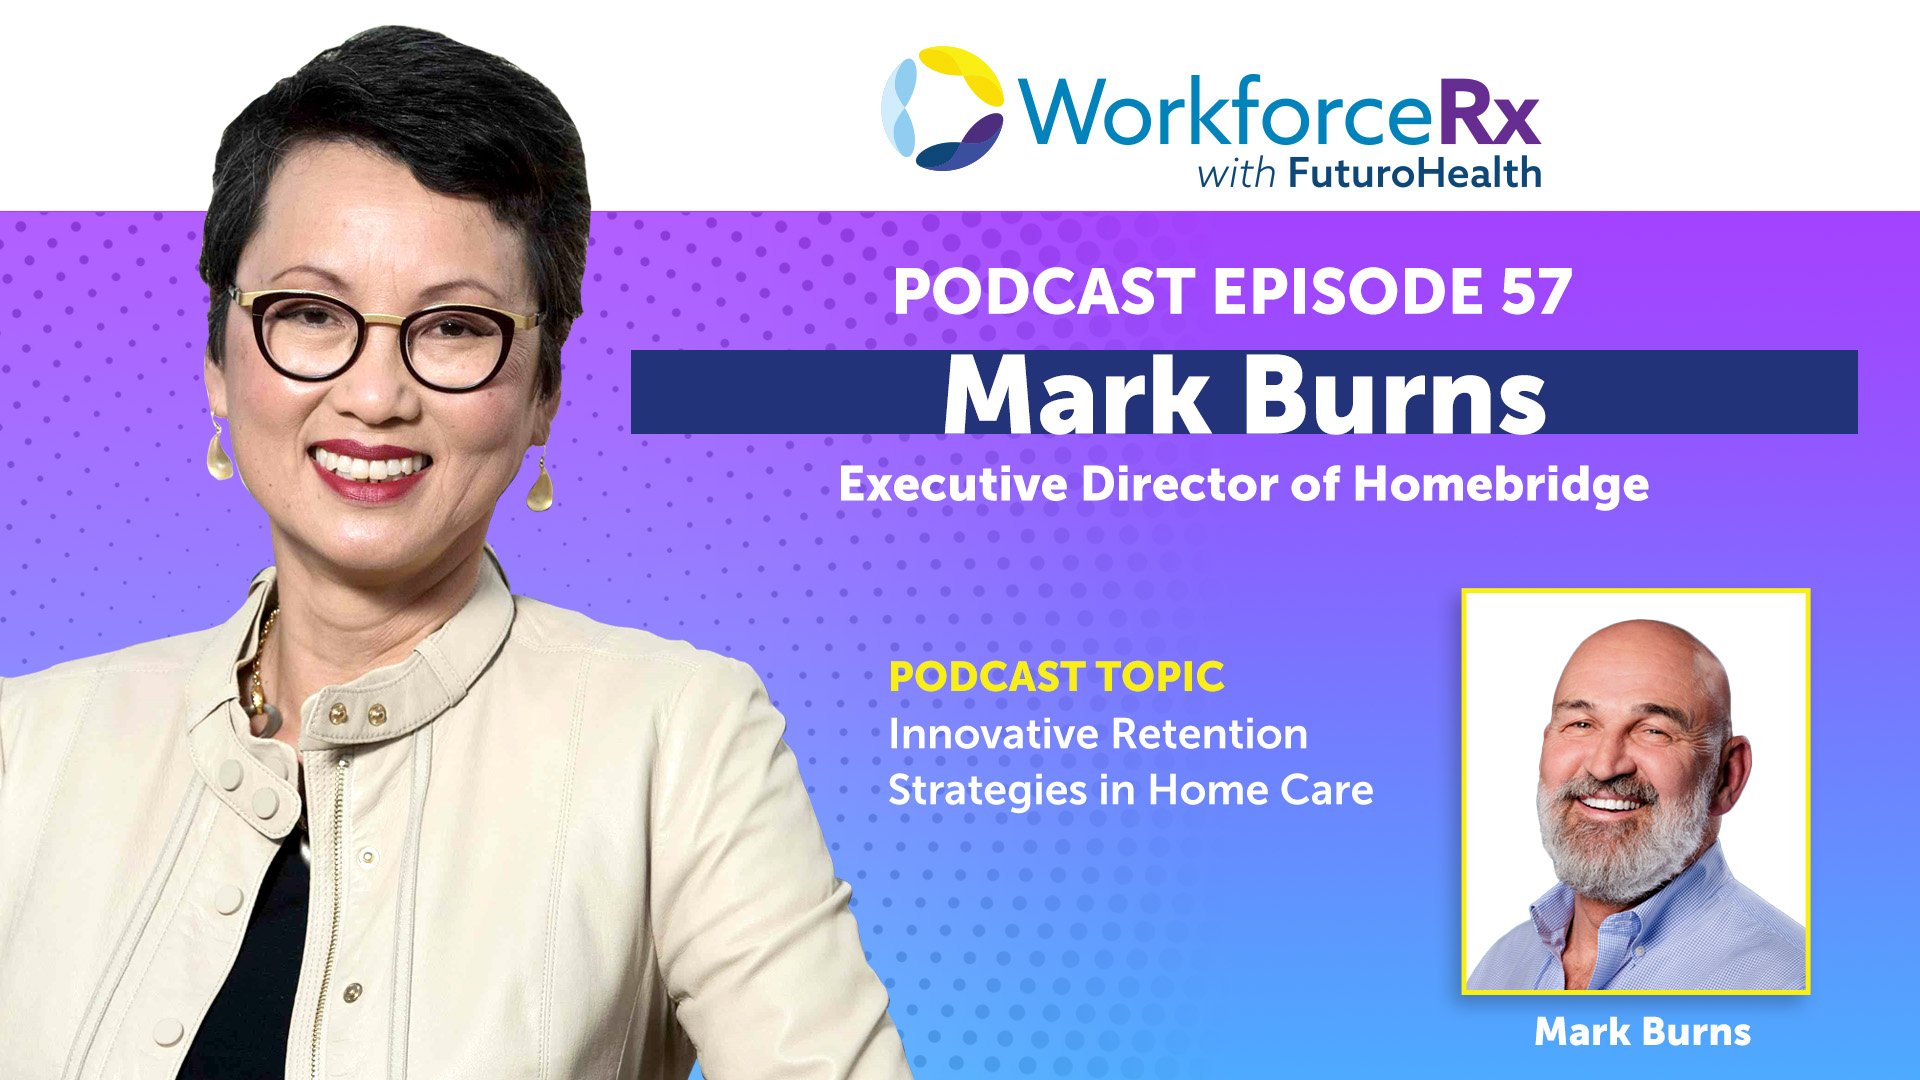 Mark Burns, Executive Director of Homebridge: Innovative Retention Strategies in Home Care